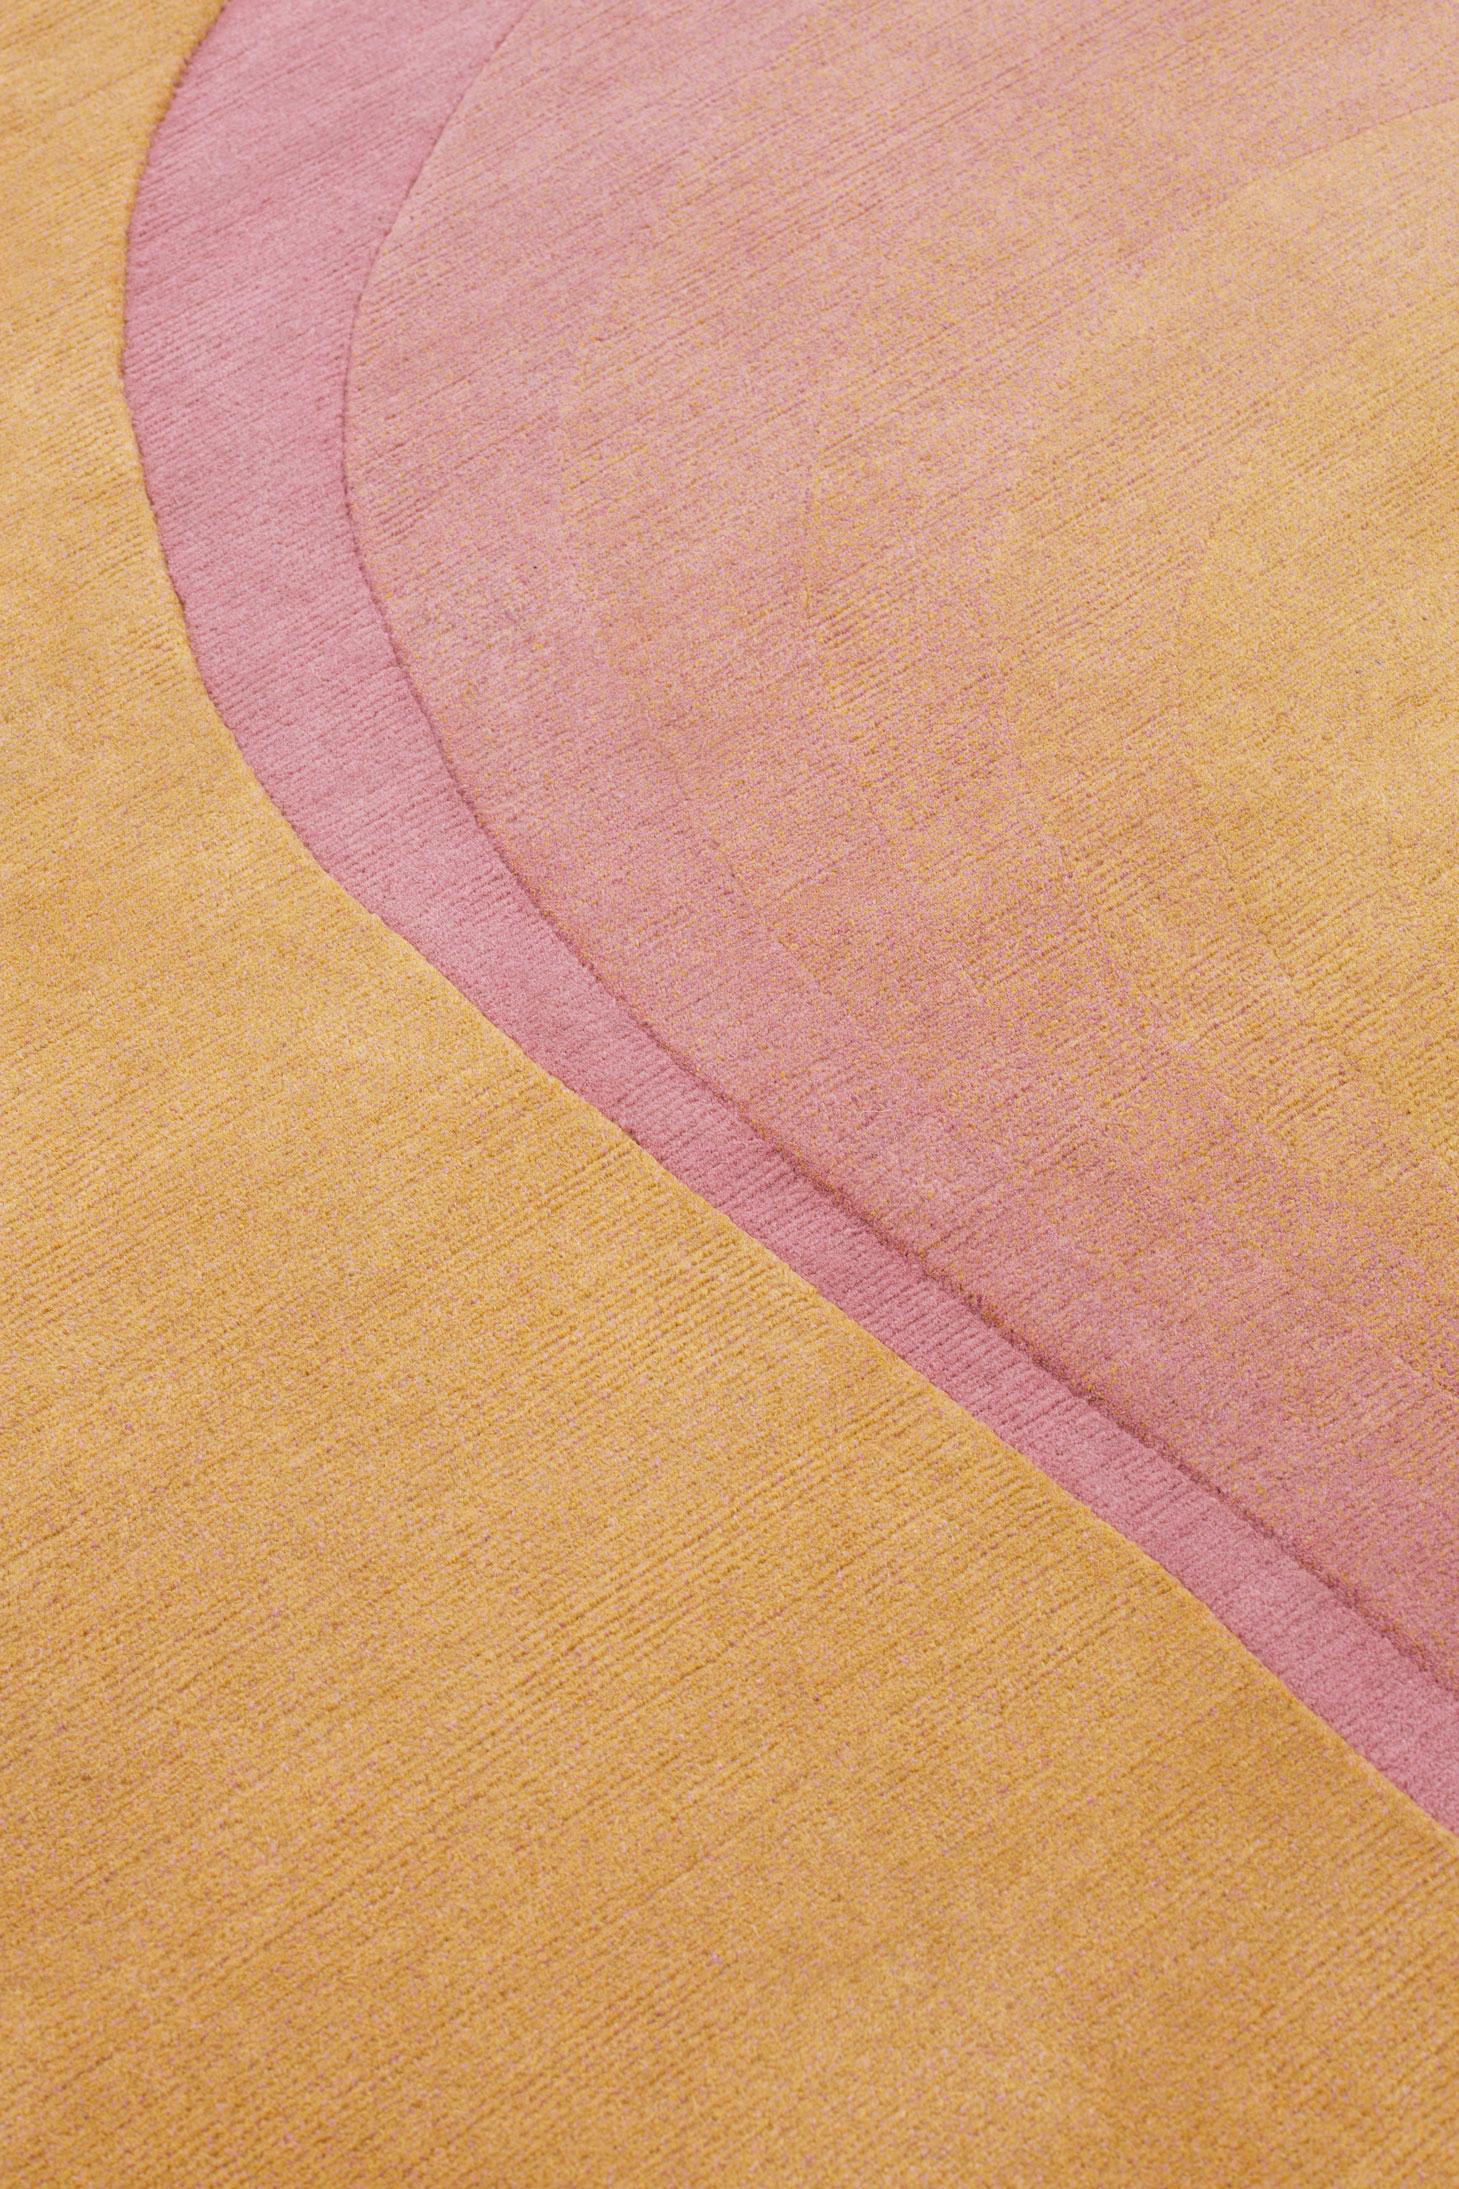 cc-tapis Chroma Radiate Yellow Pink Round Rug by Germans Ermičs - EN STOCK Neuf - En vente à Brooklyn, NY